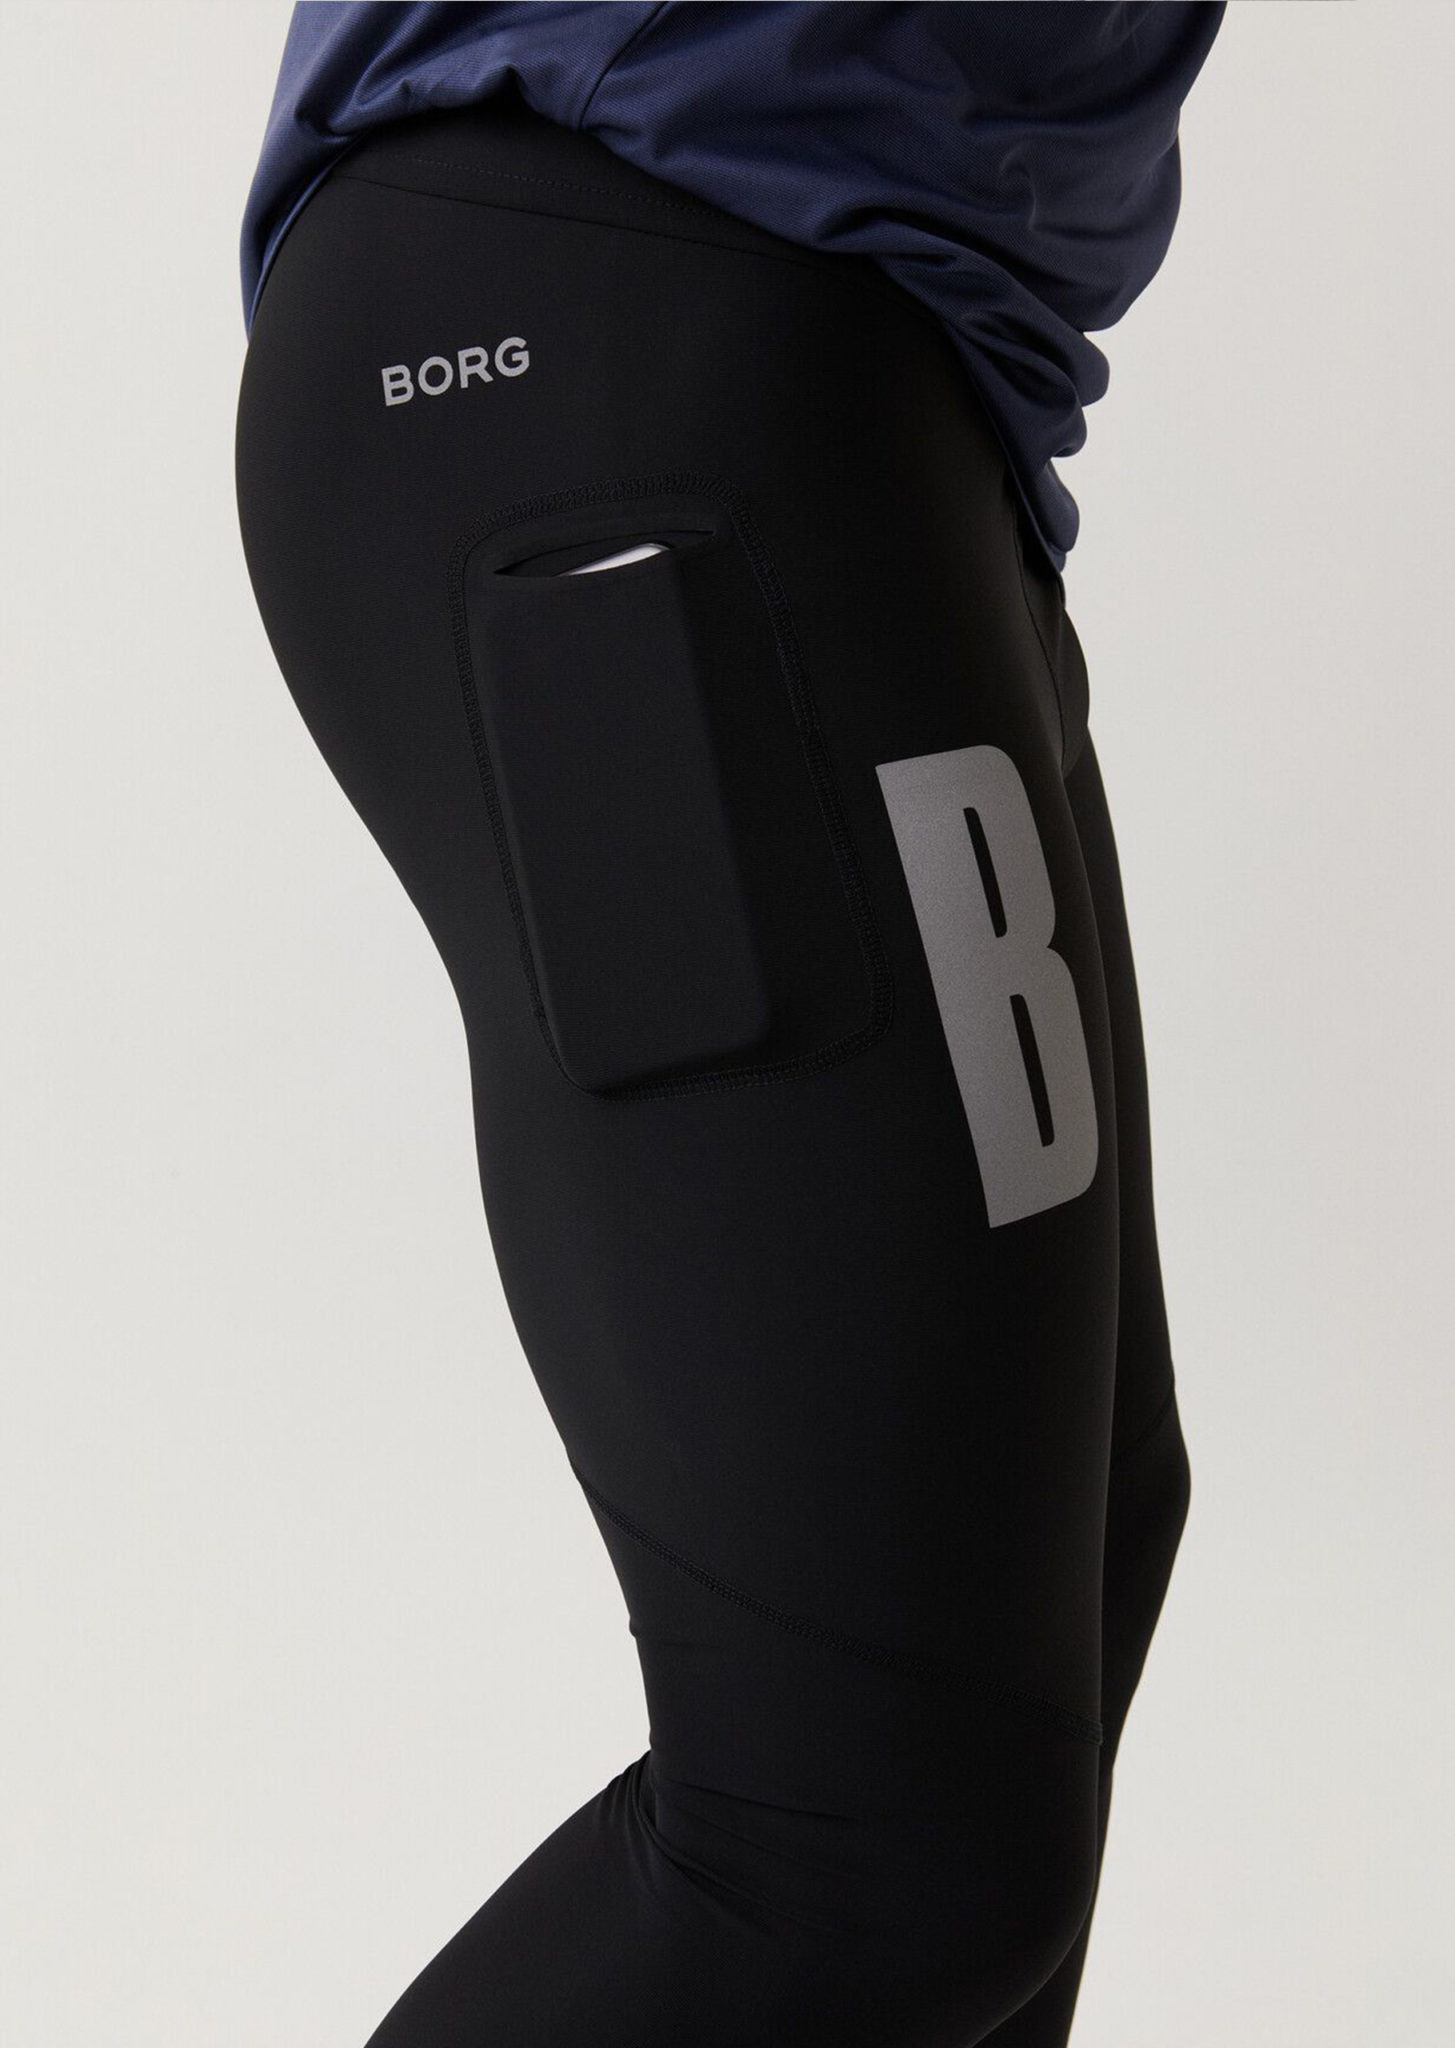 Bjorn Borg Underwear NOS Offer - EU - Spain, New - The wholesale platform